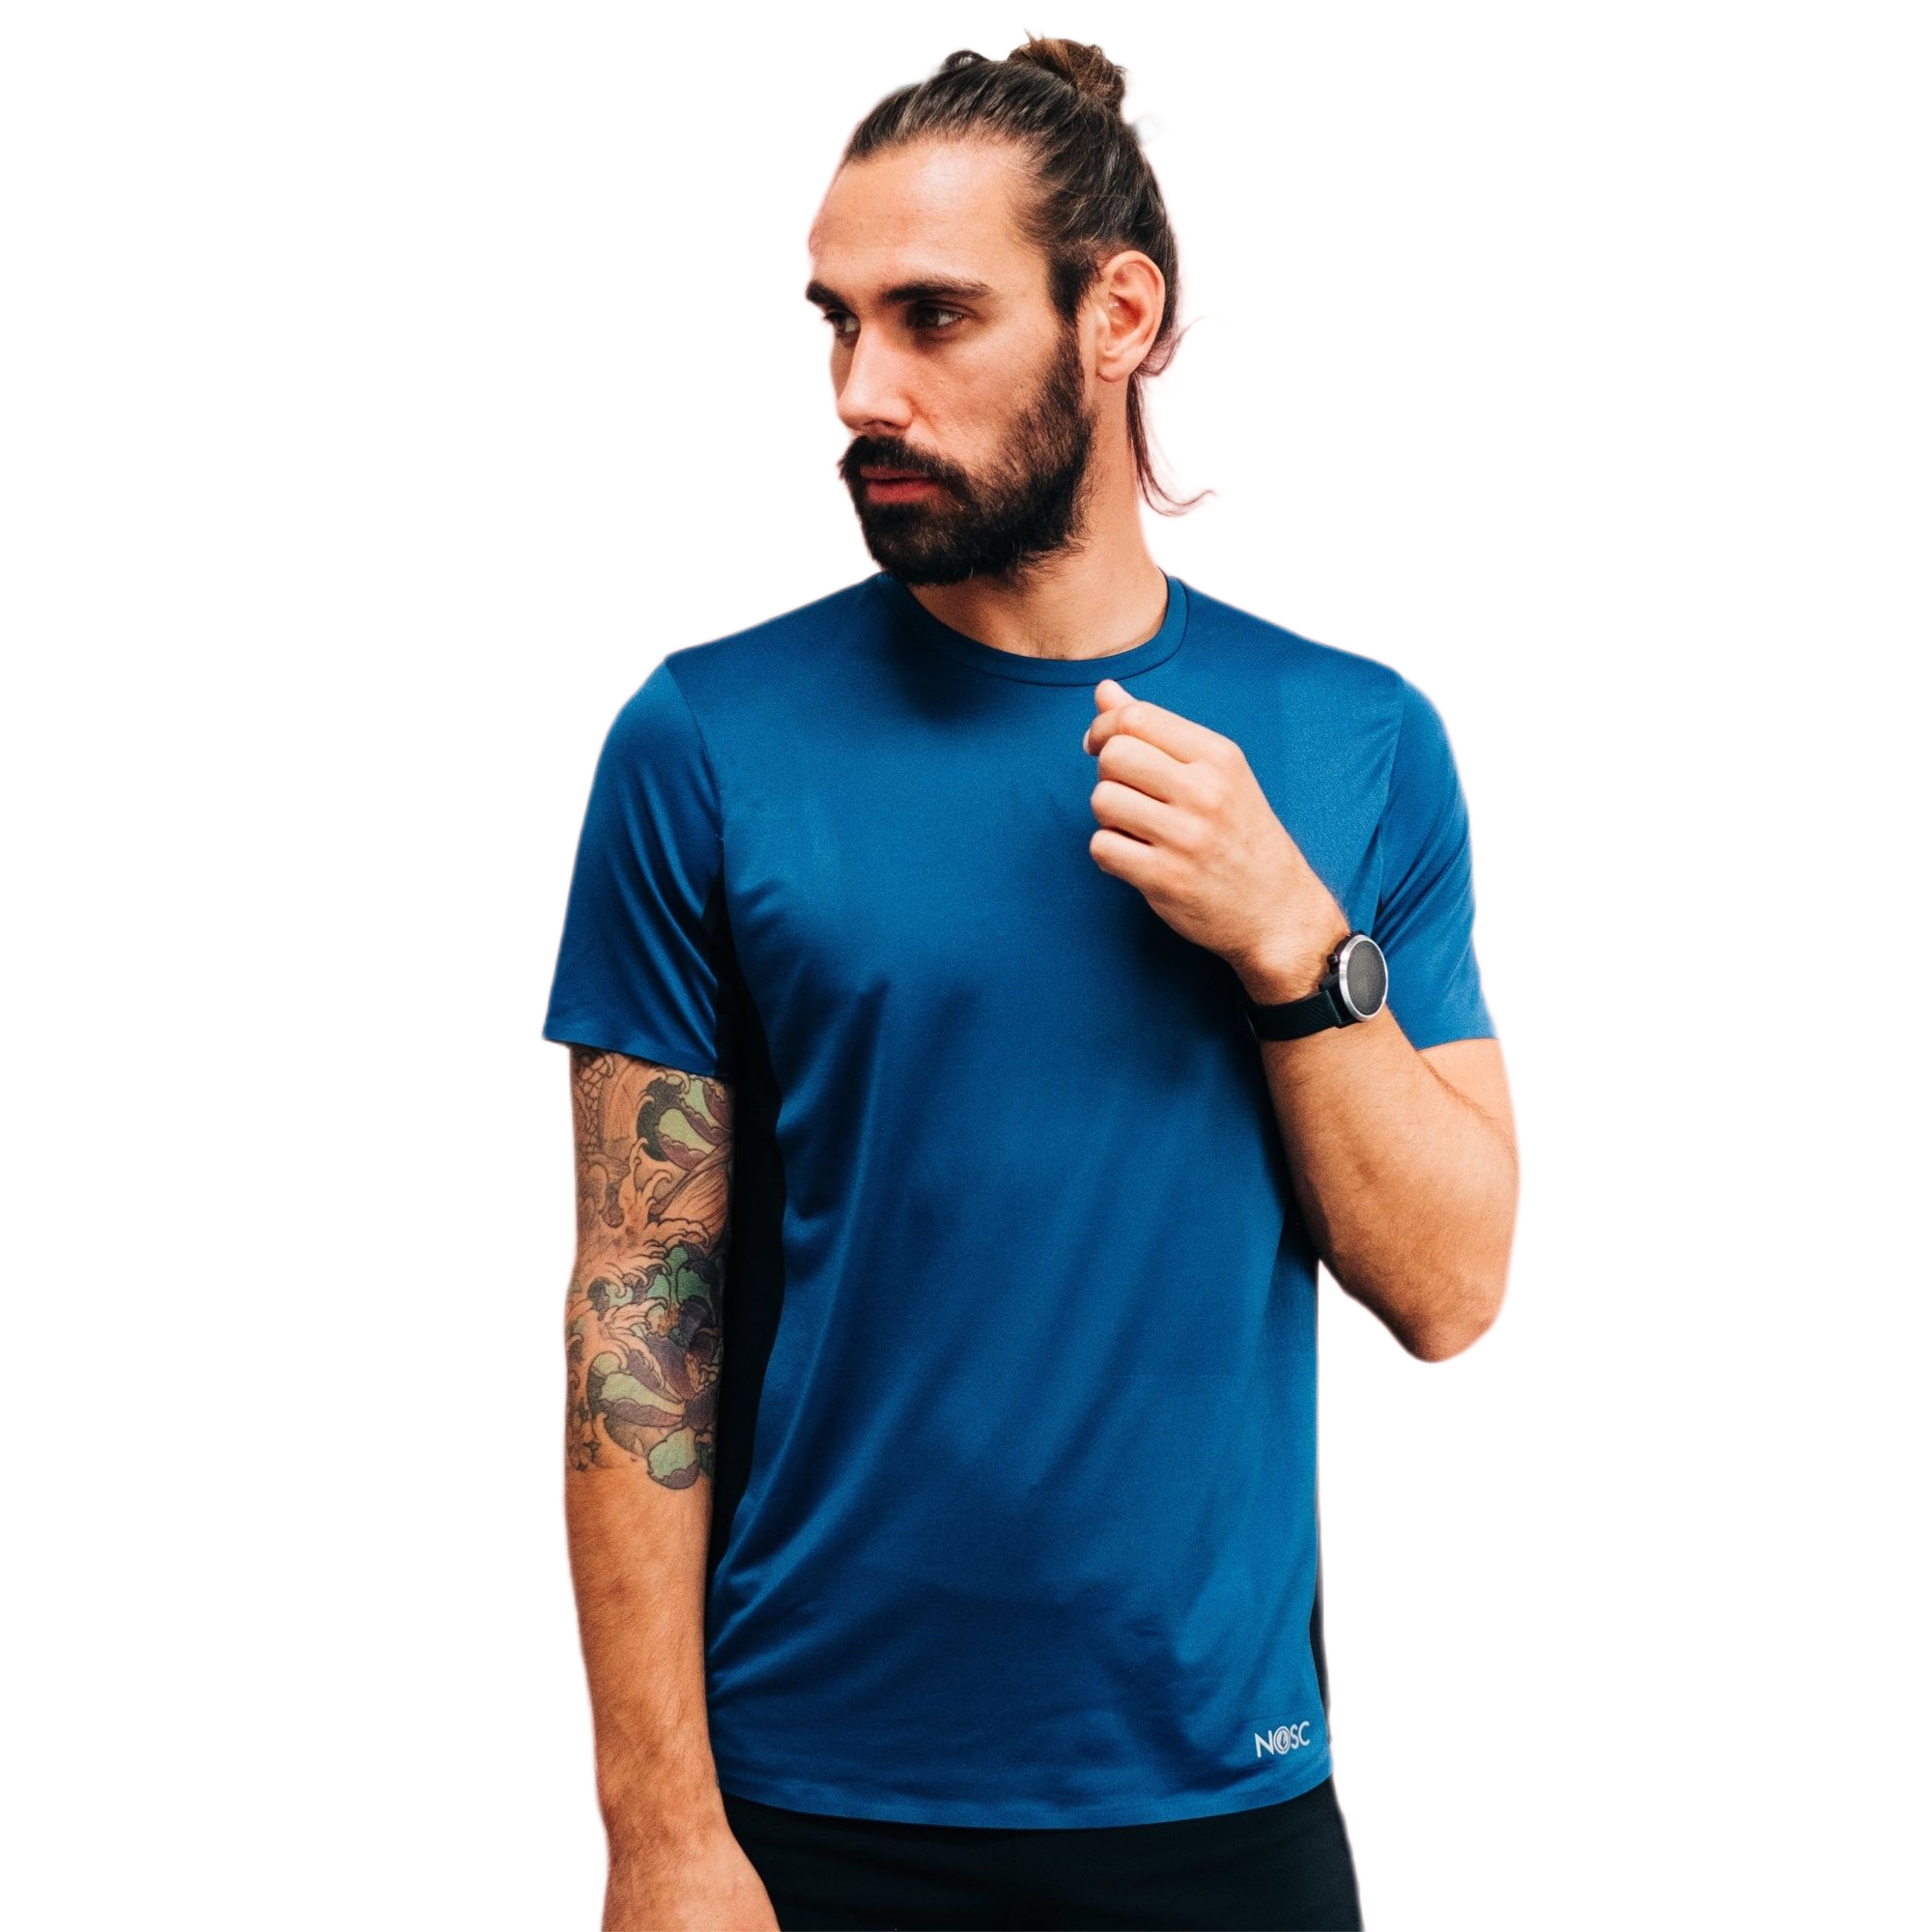 T-Shirt de Running pour homme Nosc Wild Manches Courtes Bleu